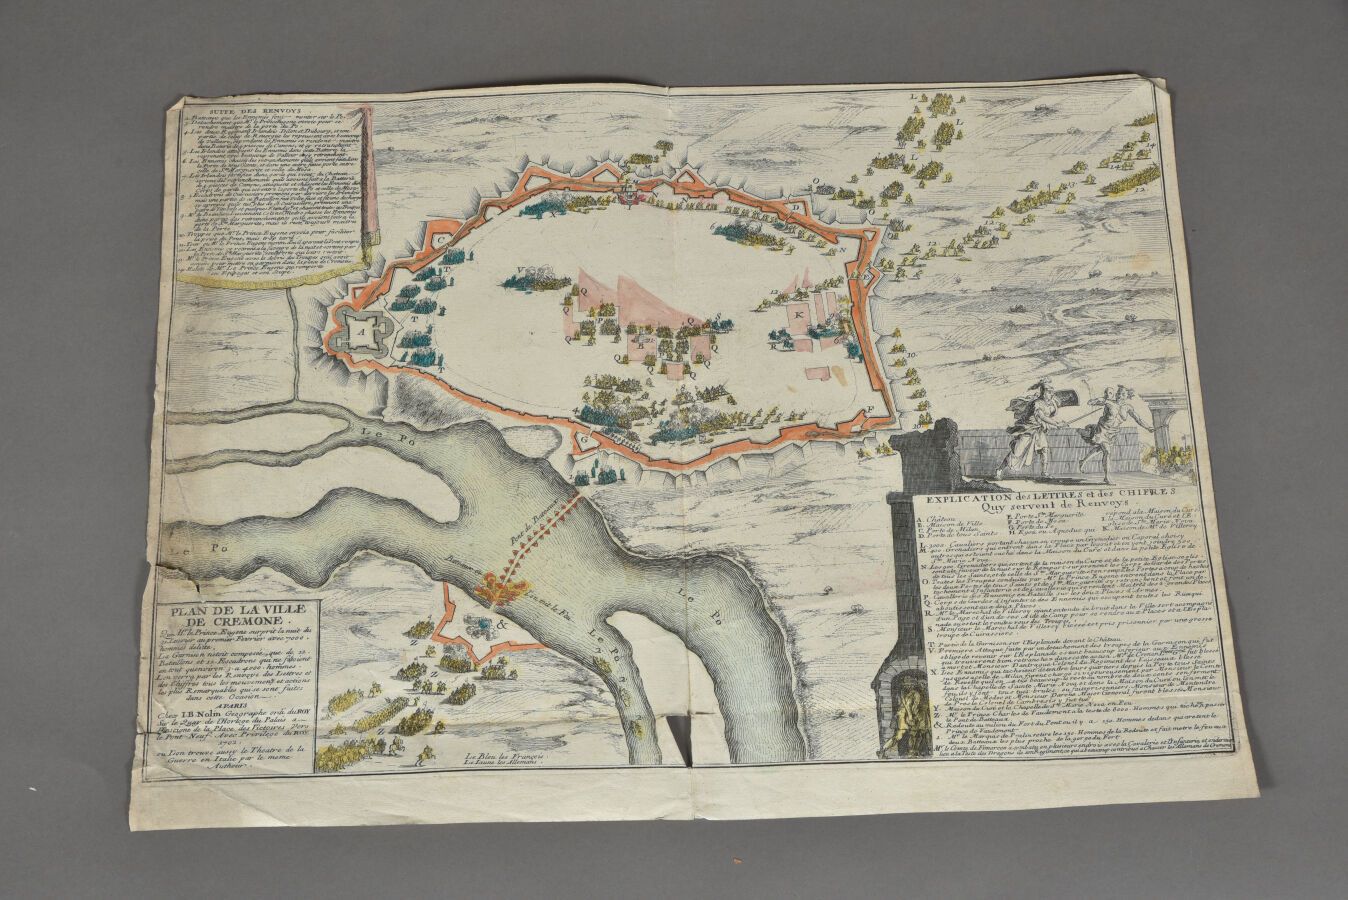 Null JEAN-BAPTISTE NOLIN (1657 - 1708)
Plan der Stadt Cremona. 
1702.
Kupferstic&hellip;